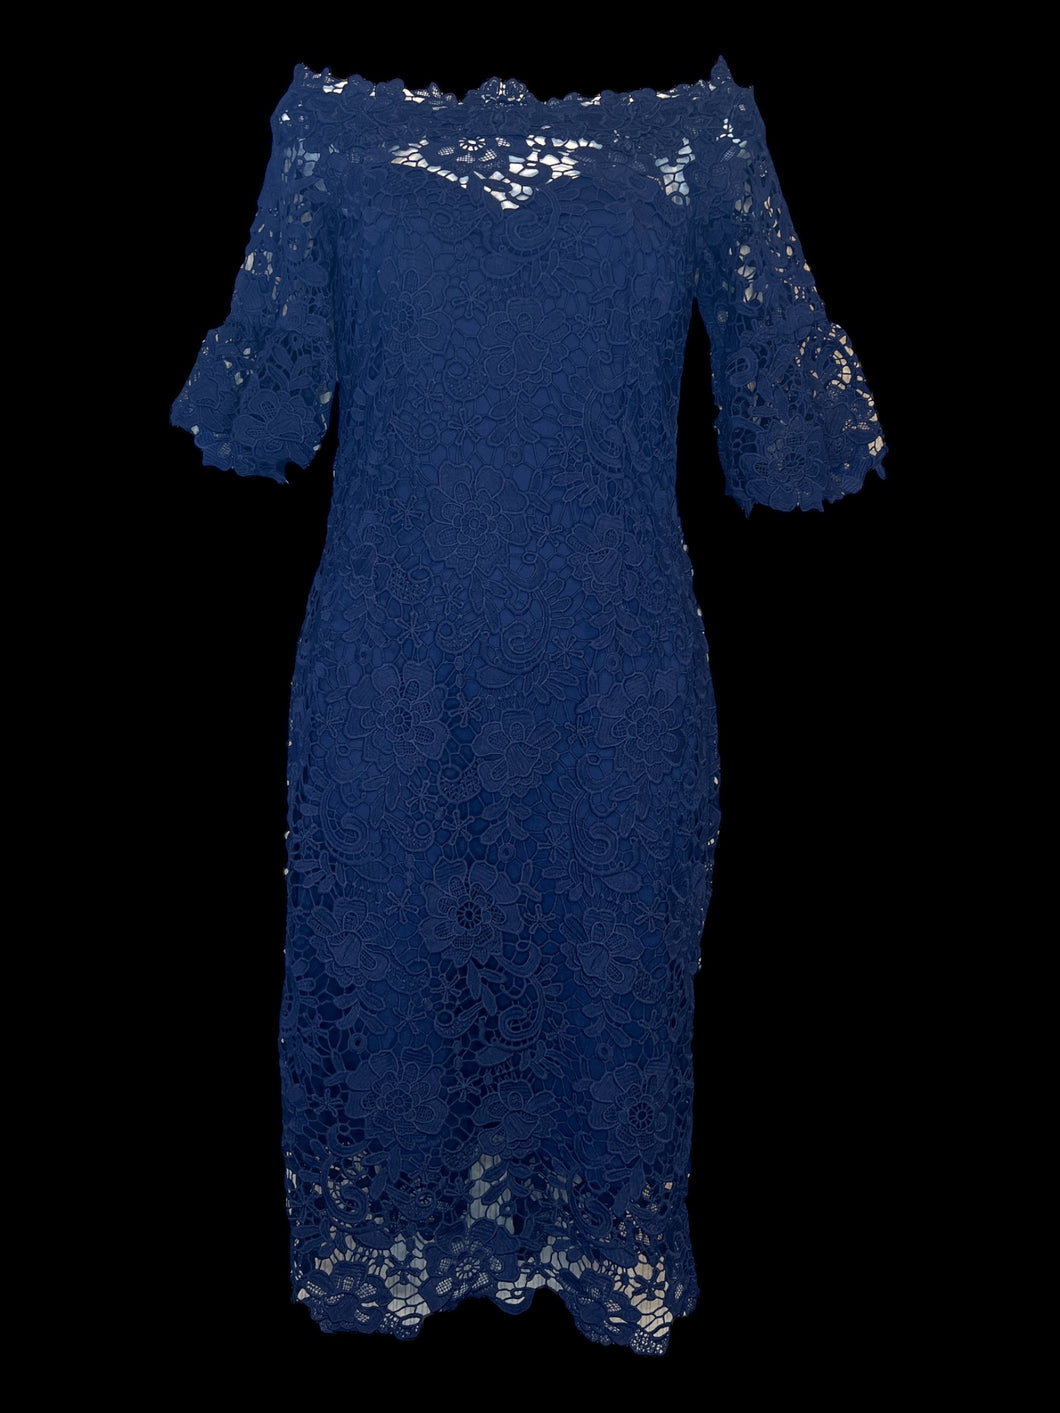 S NWT Blue short sleeve lace bodycon off the shoulder dress w/ elastic neckline, blue petticoat, & zipper closure